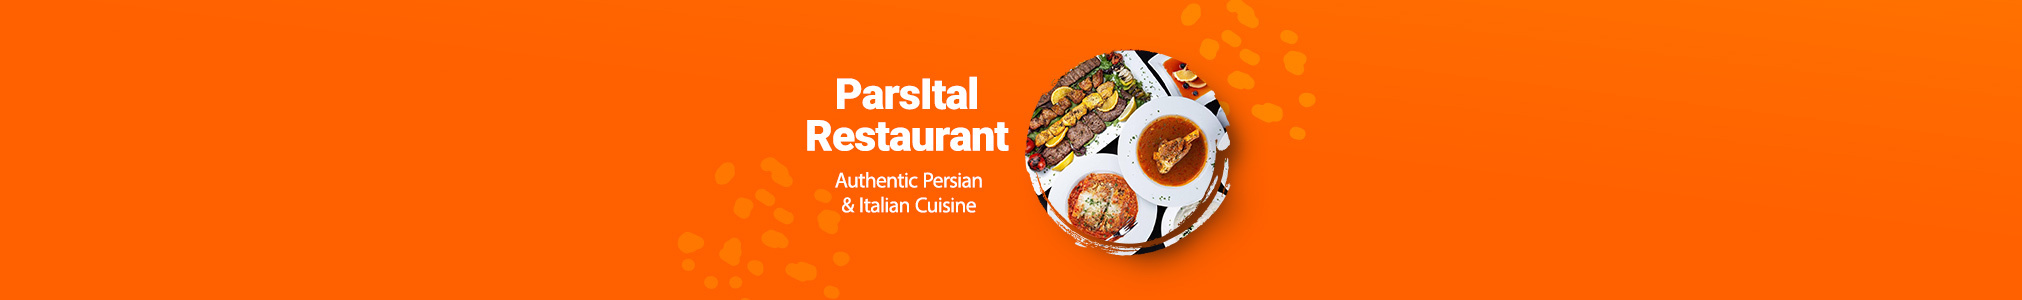 ParsItal Restaurant